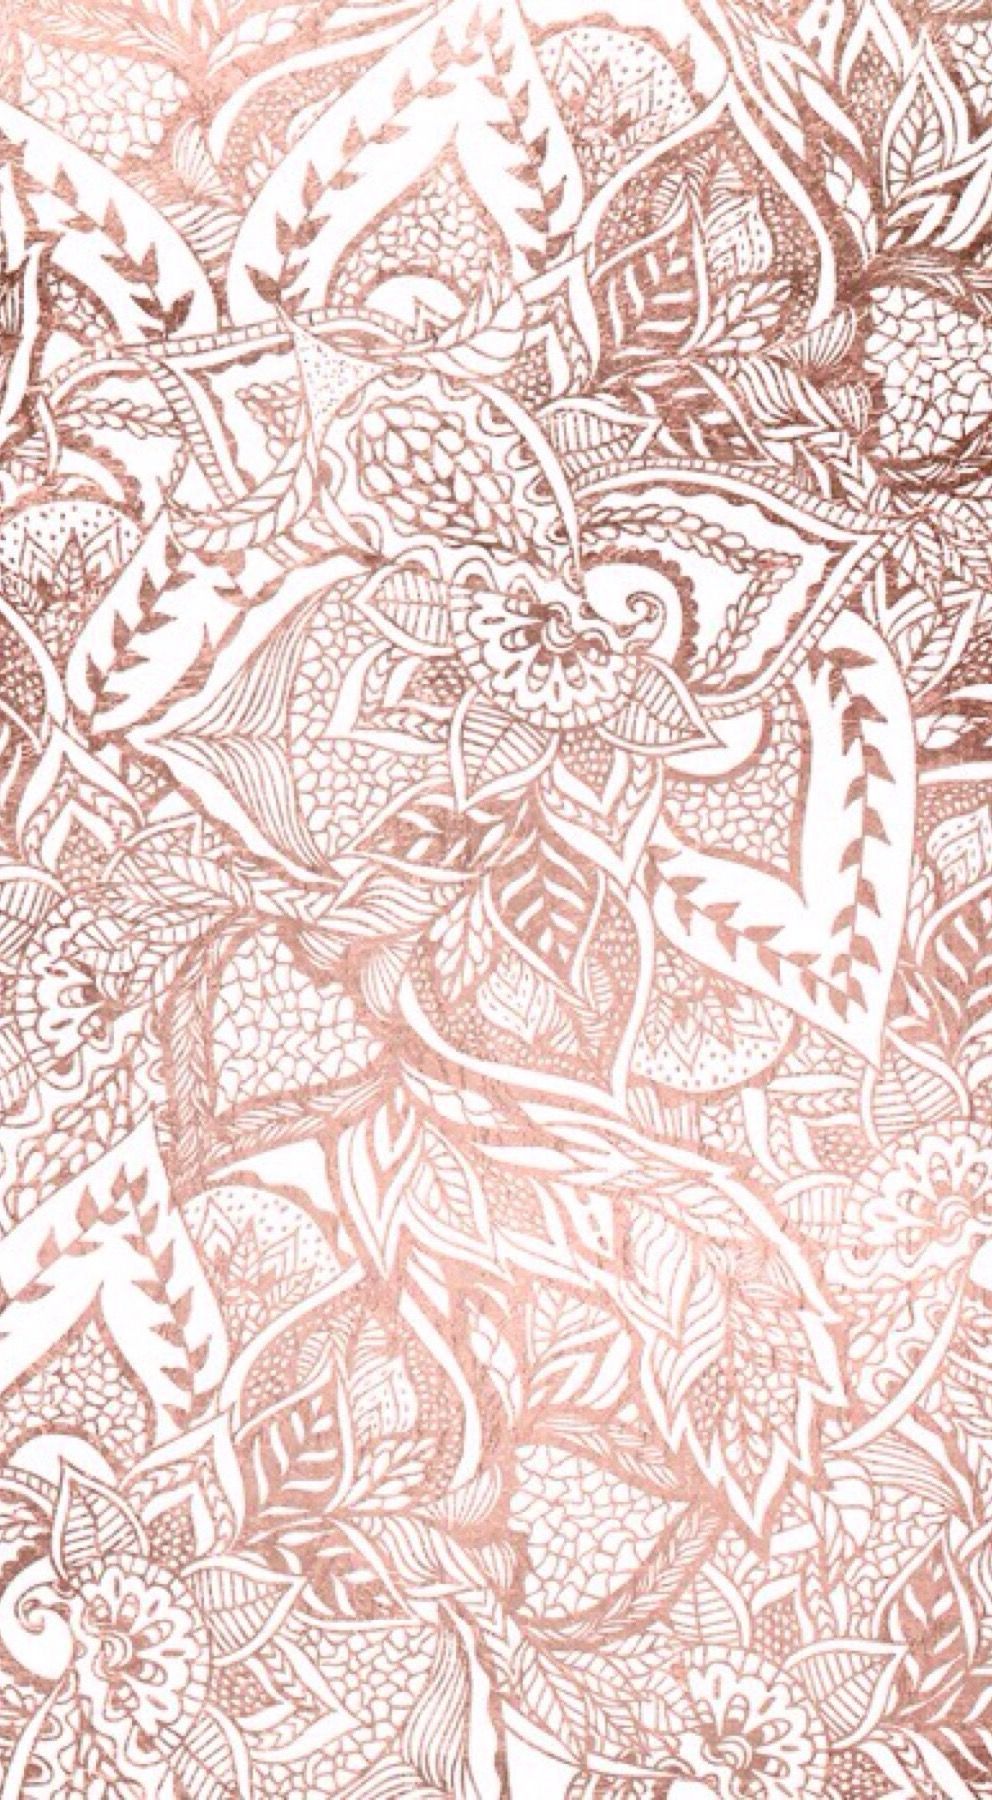 A close up of an ornate pattern in copper - Rose gold